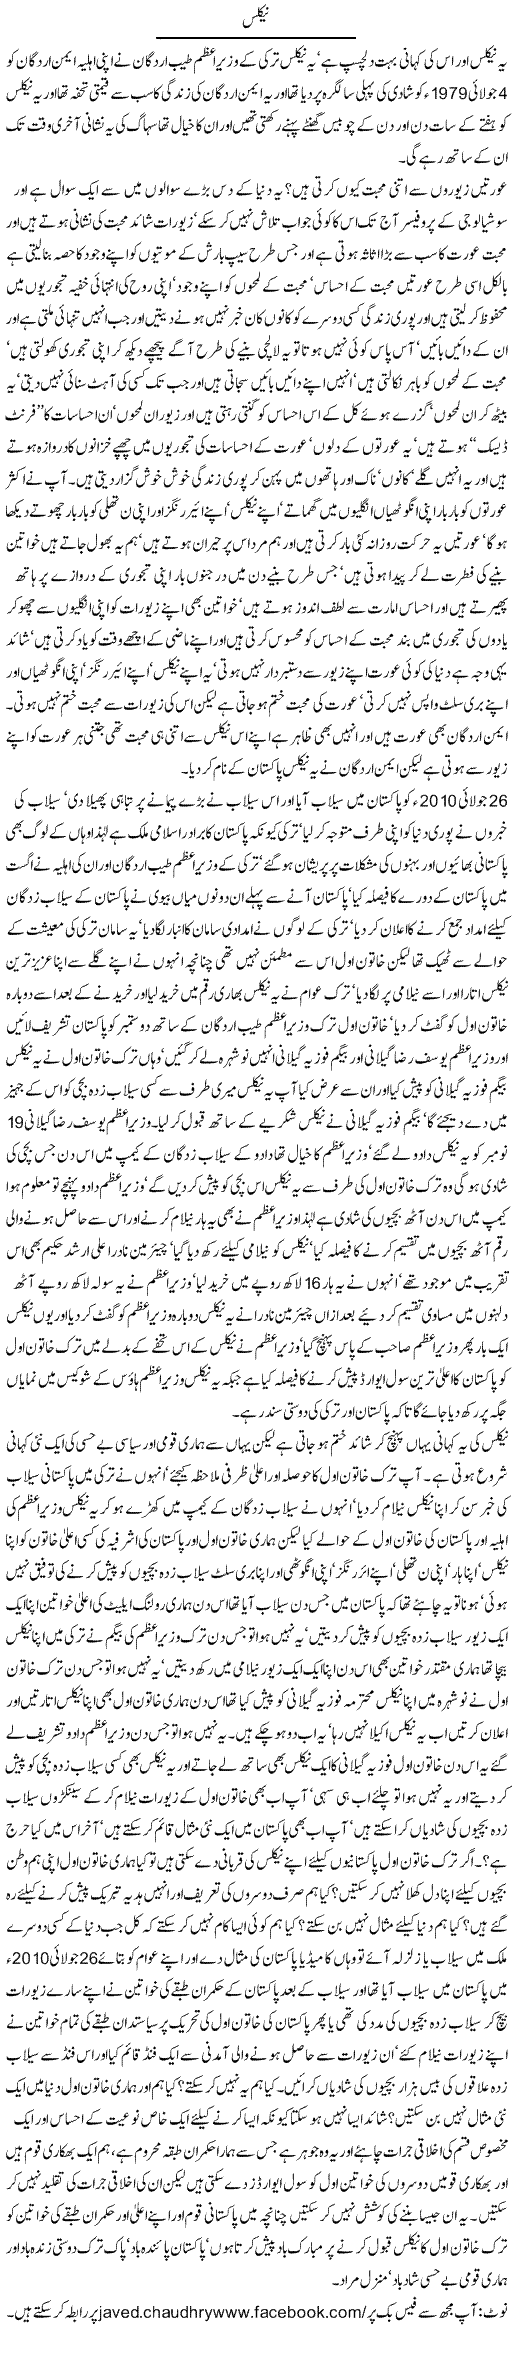 Nucleus Express Column Javed Chaudhry 23 November 2010